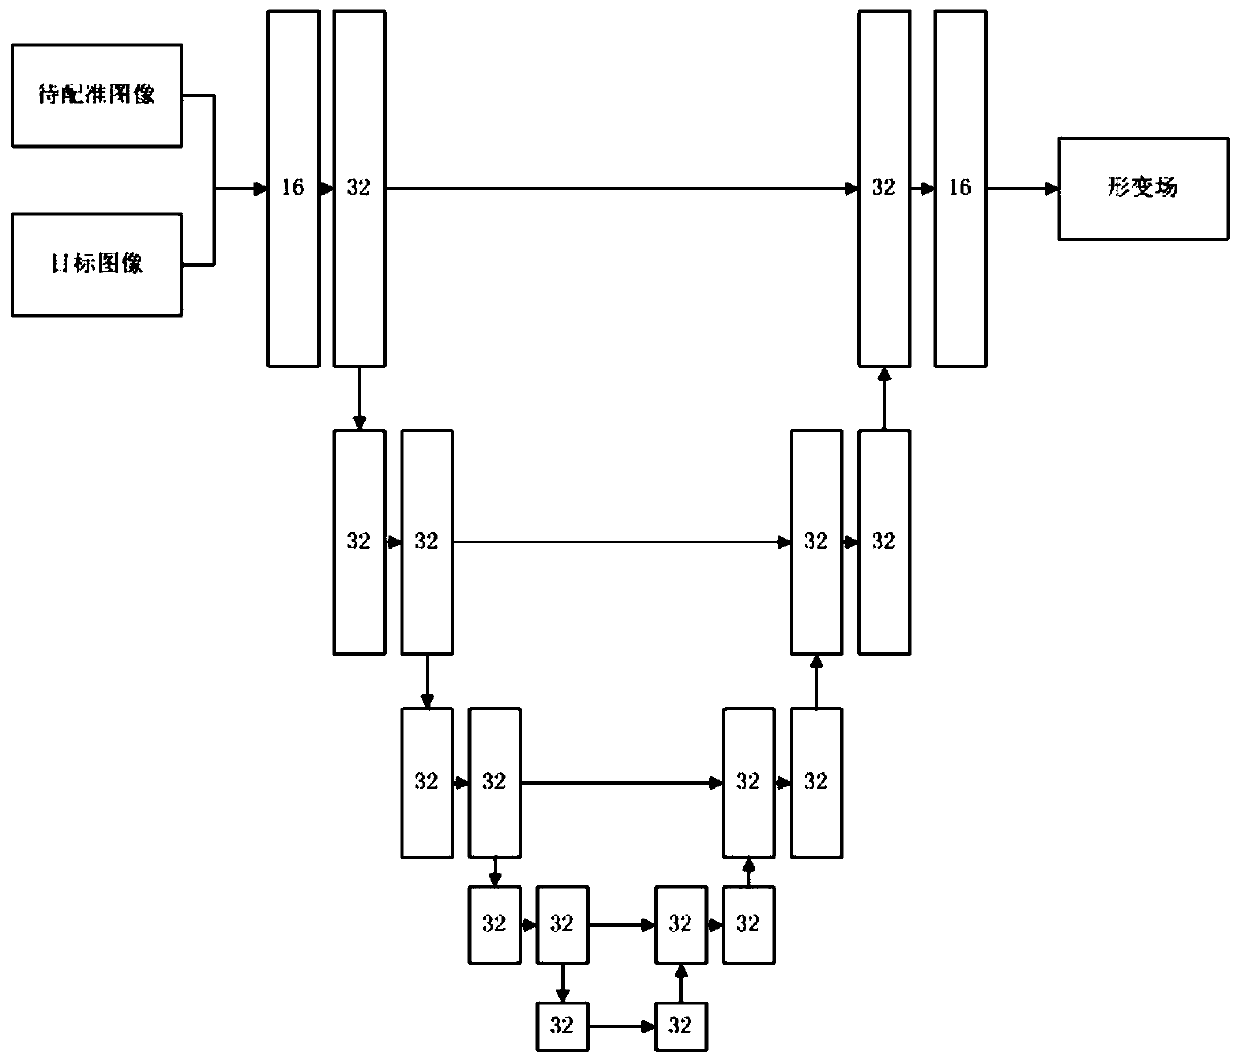 three-dimensional medical image registration method based on a U-NET neural network